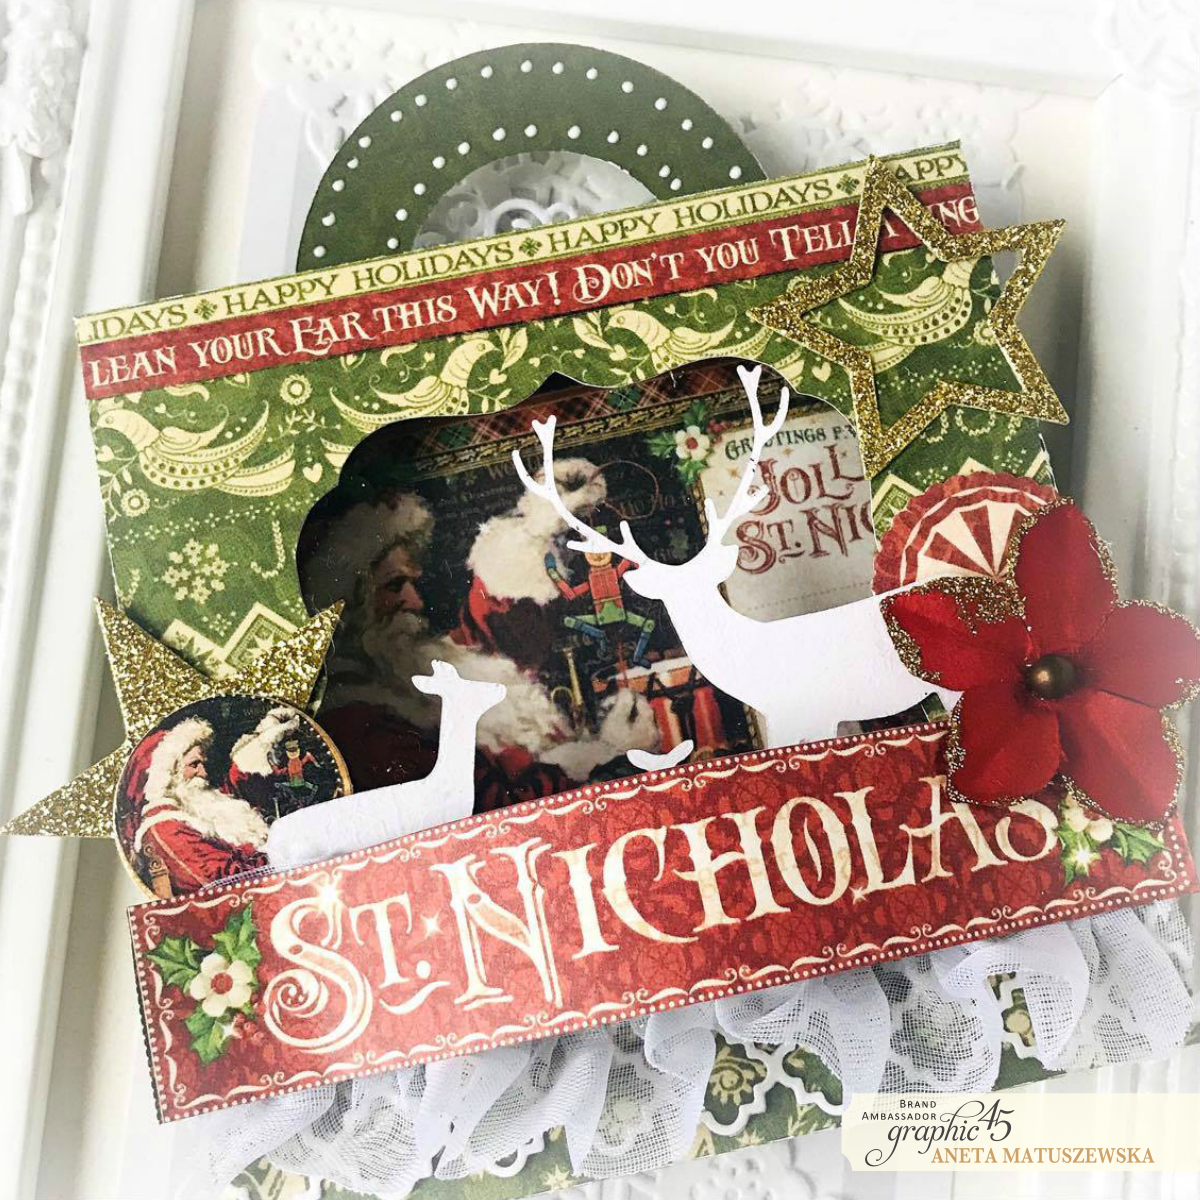 Christmas gift box for Graphic 45, by Aneta Matuszewska, photo 1.png